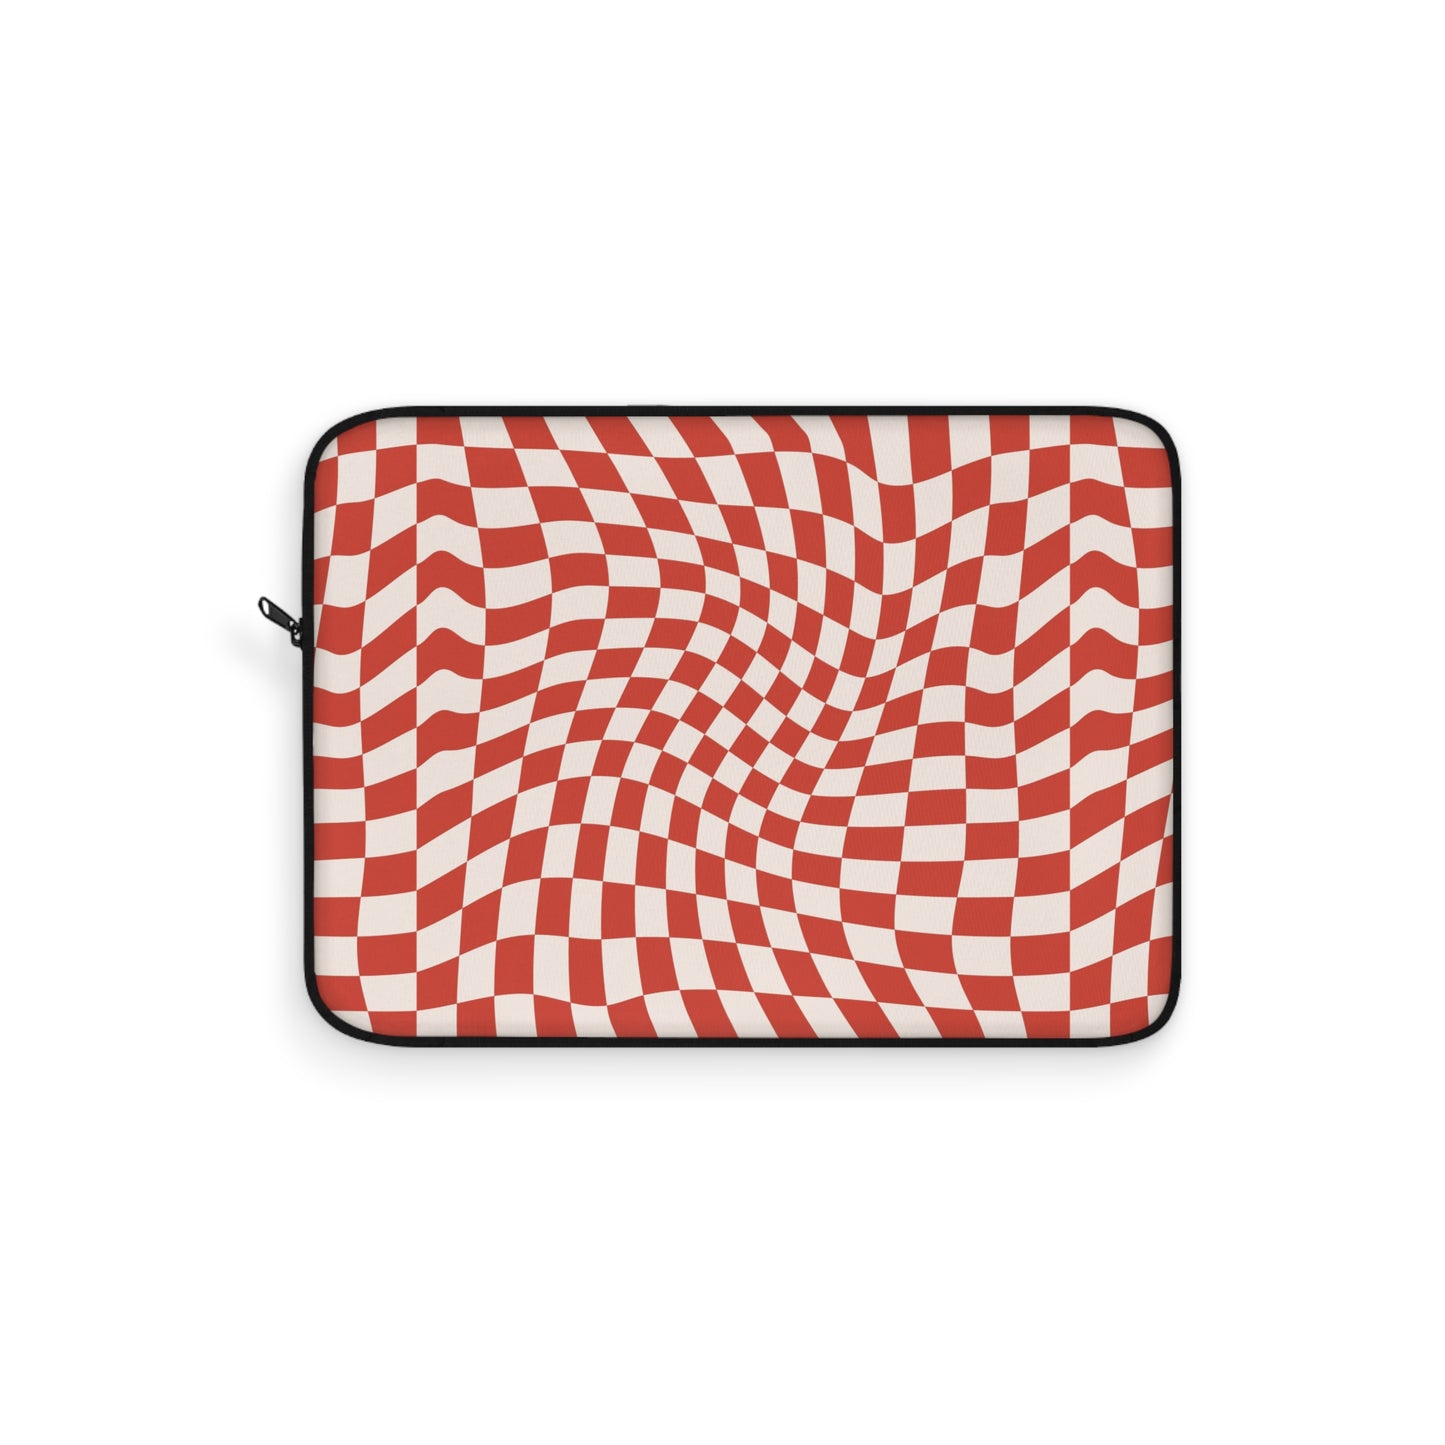 Trendy Wavy Cherry Cream Checkerboard Laptop Sleeve